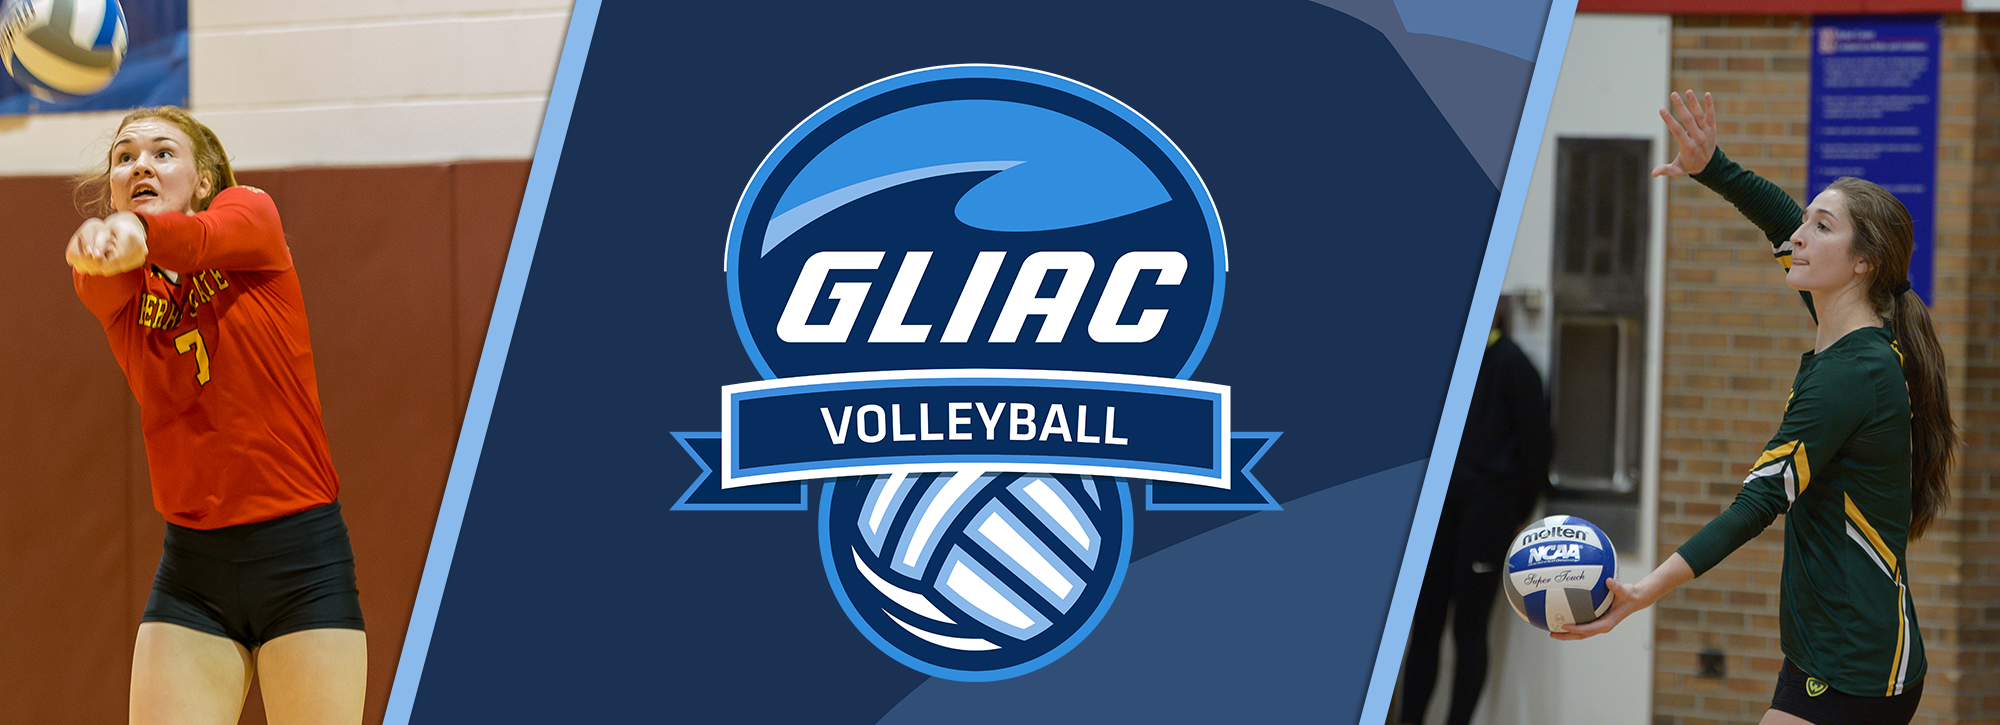 FSU's O'Connell, WSU's Wagner Claim GLIAC Volleyball Players of the Week